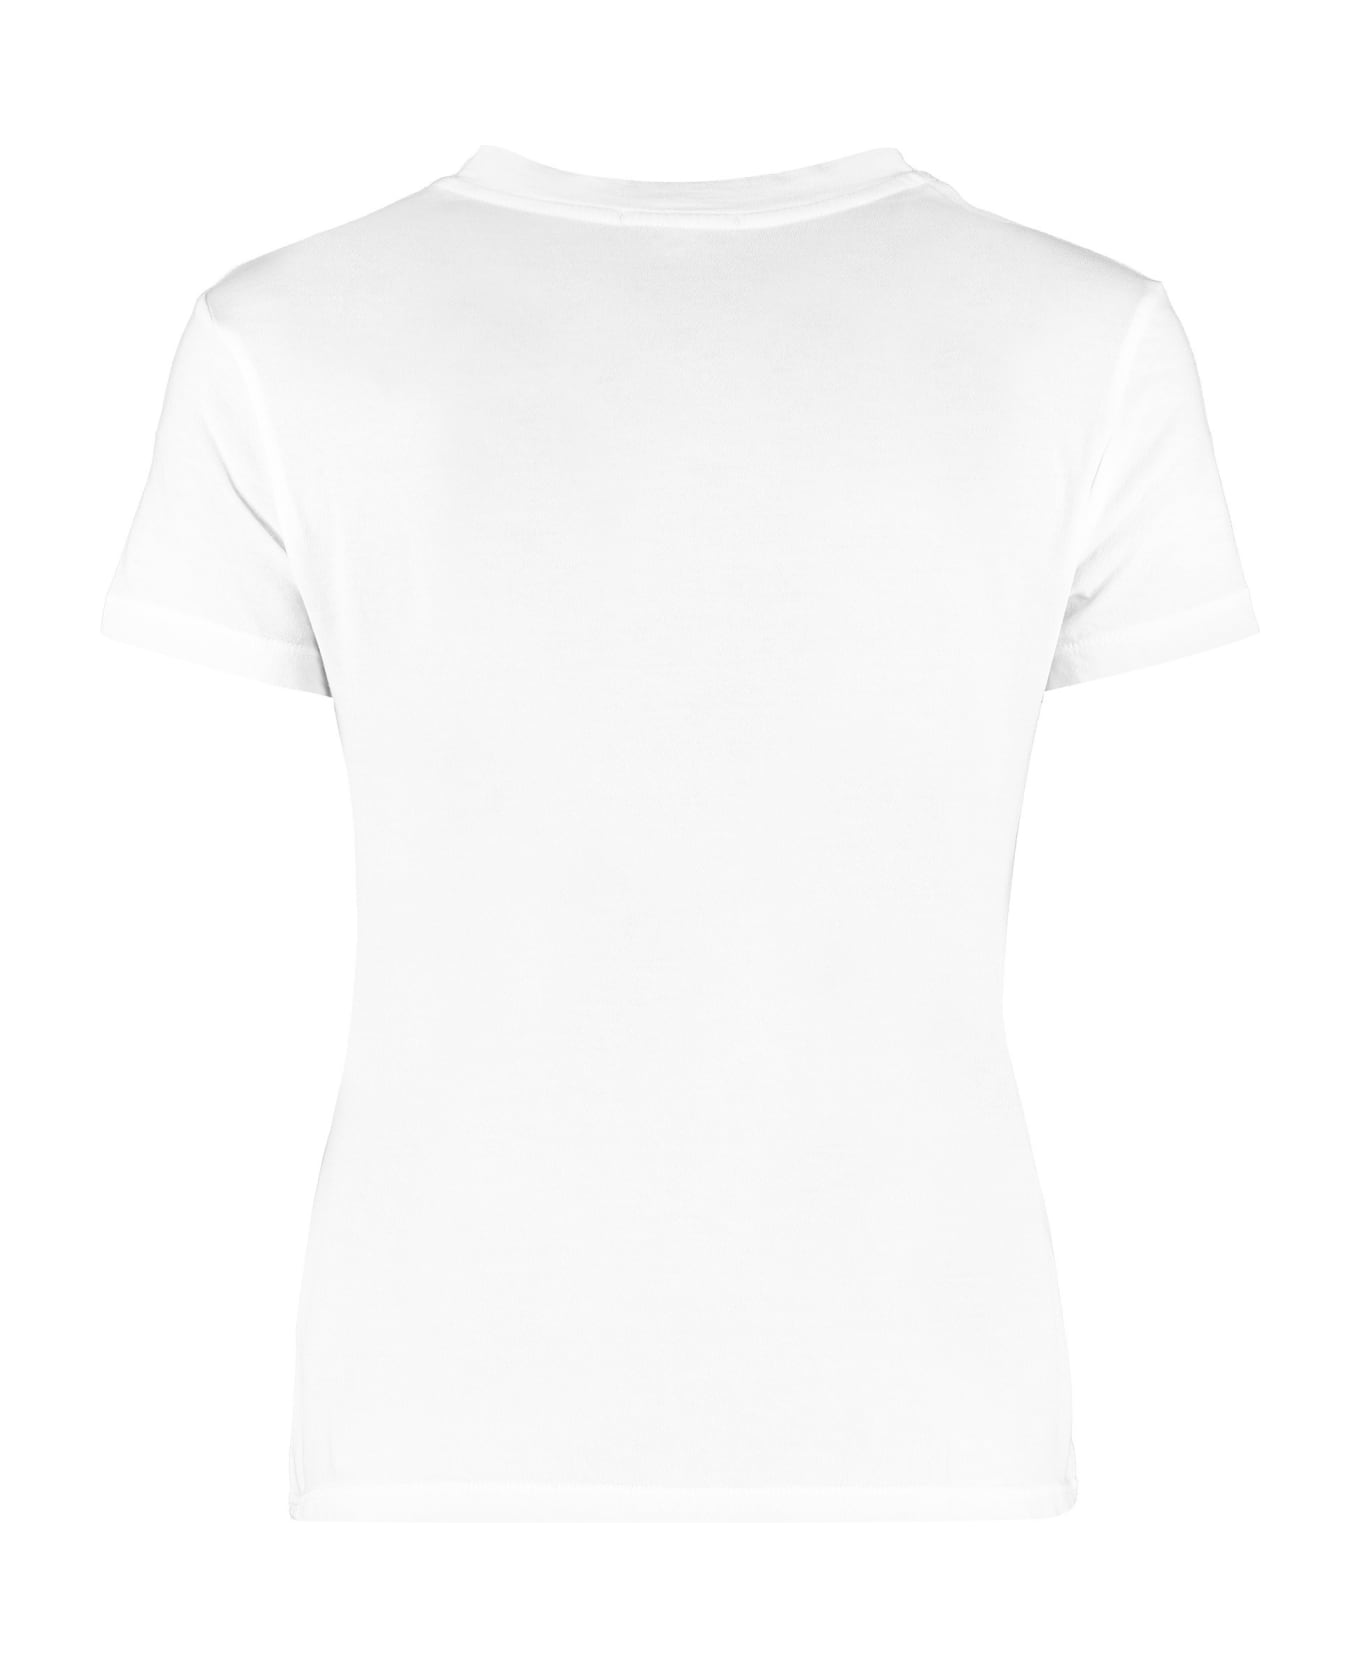 James Perse Cotton Crew-neck T-shirt - White Tシャツ